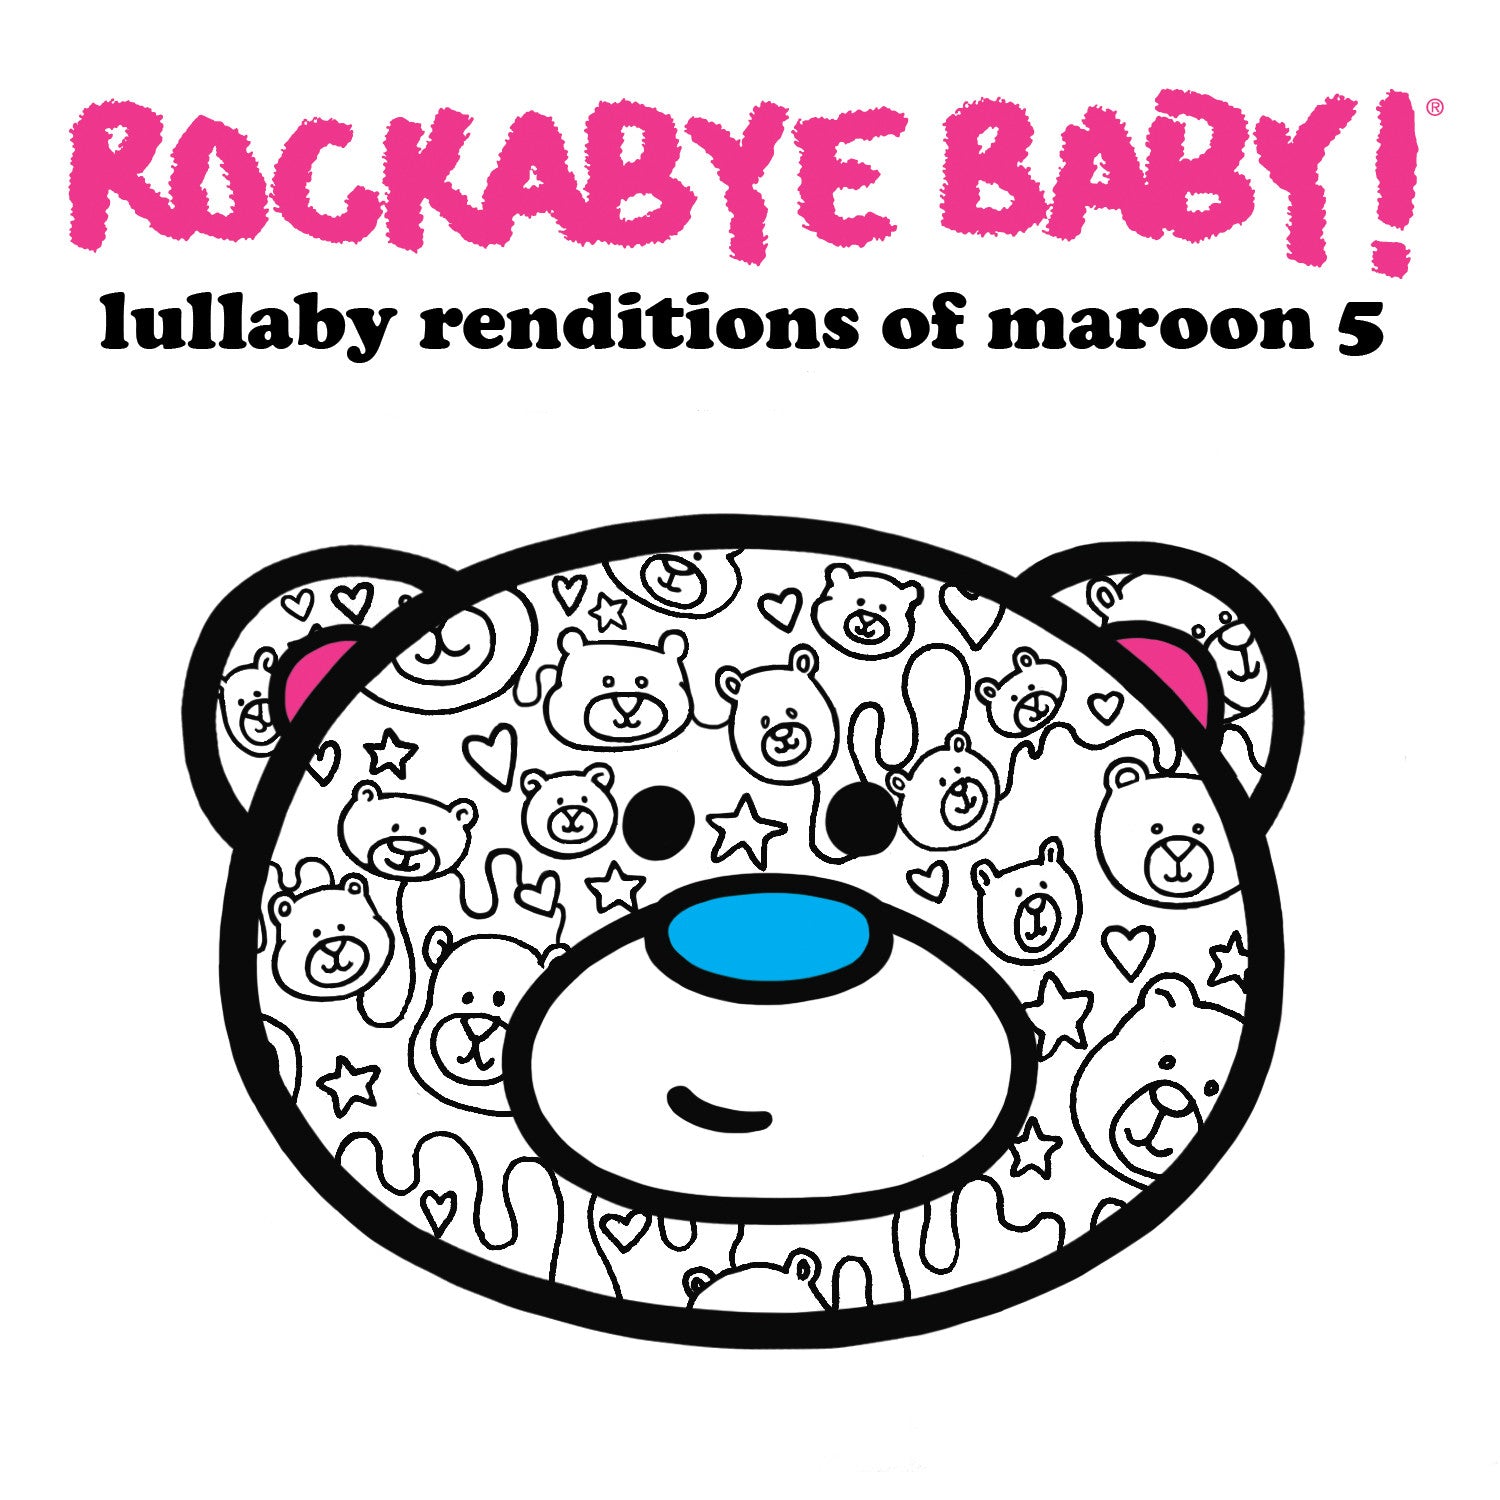 rockabye baby lullaby renditions maroon 5